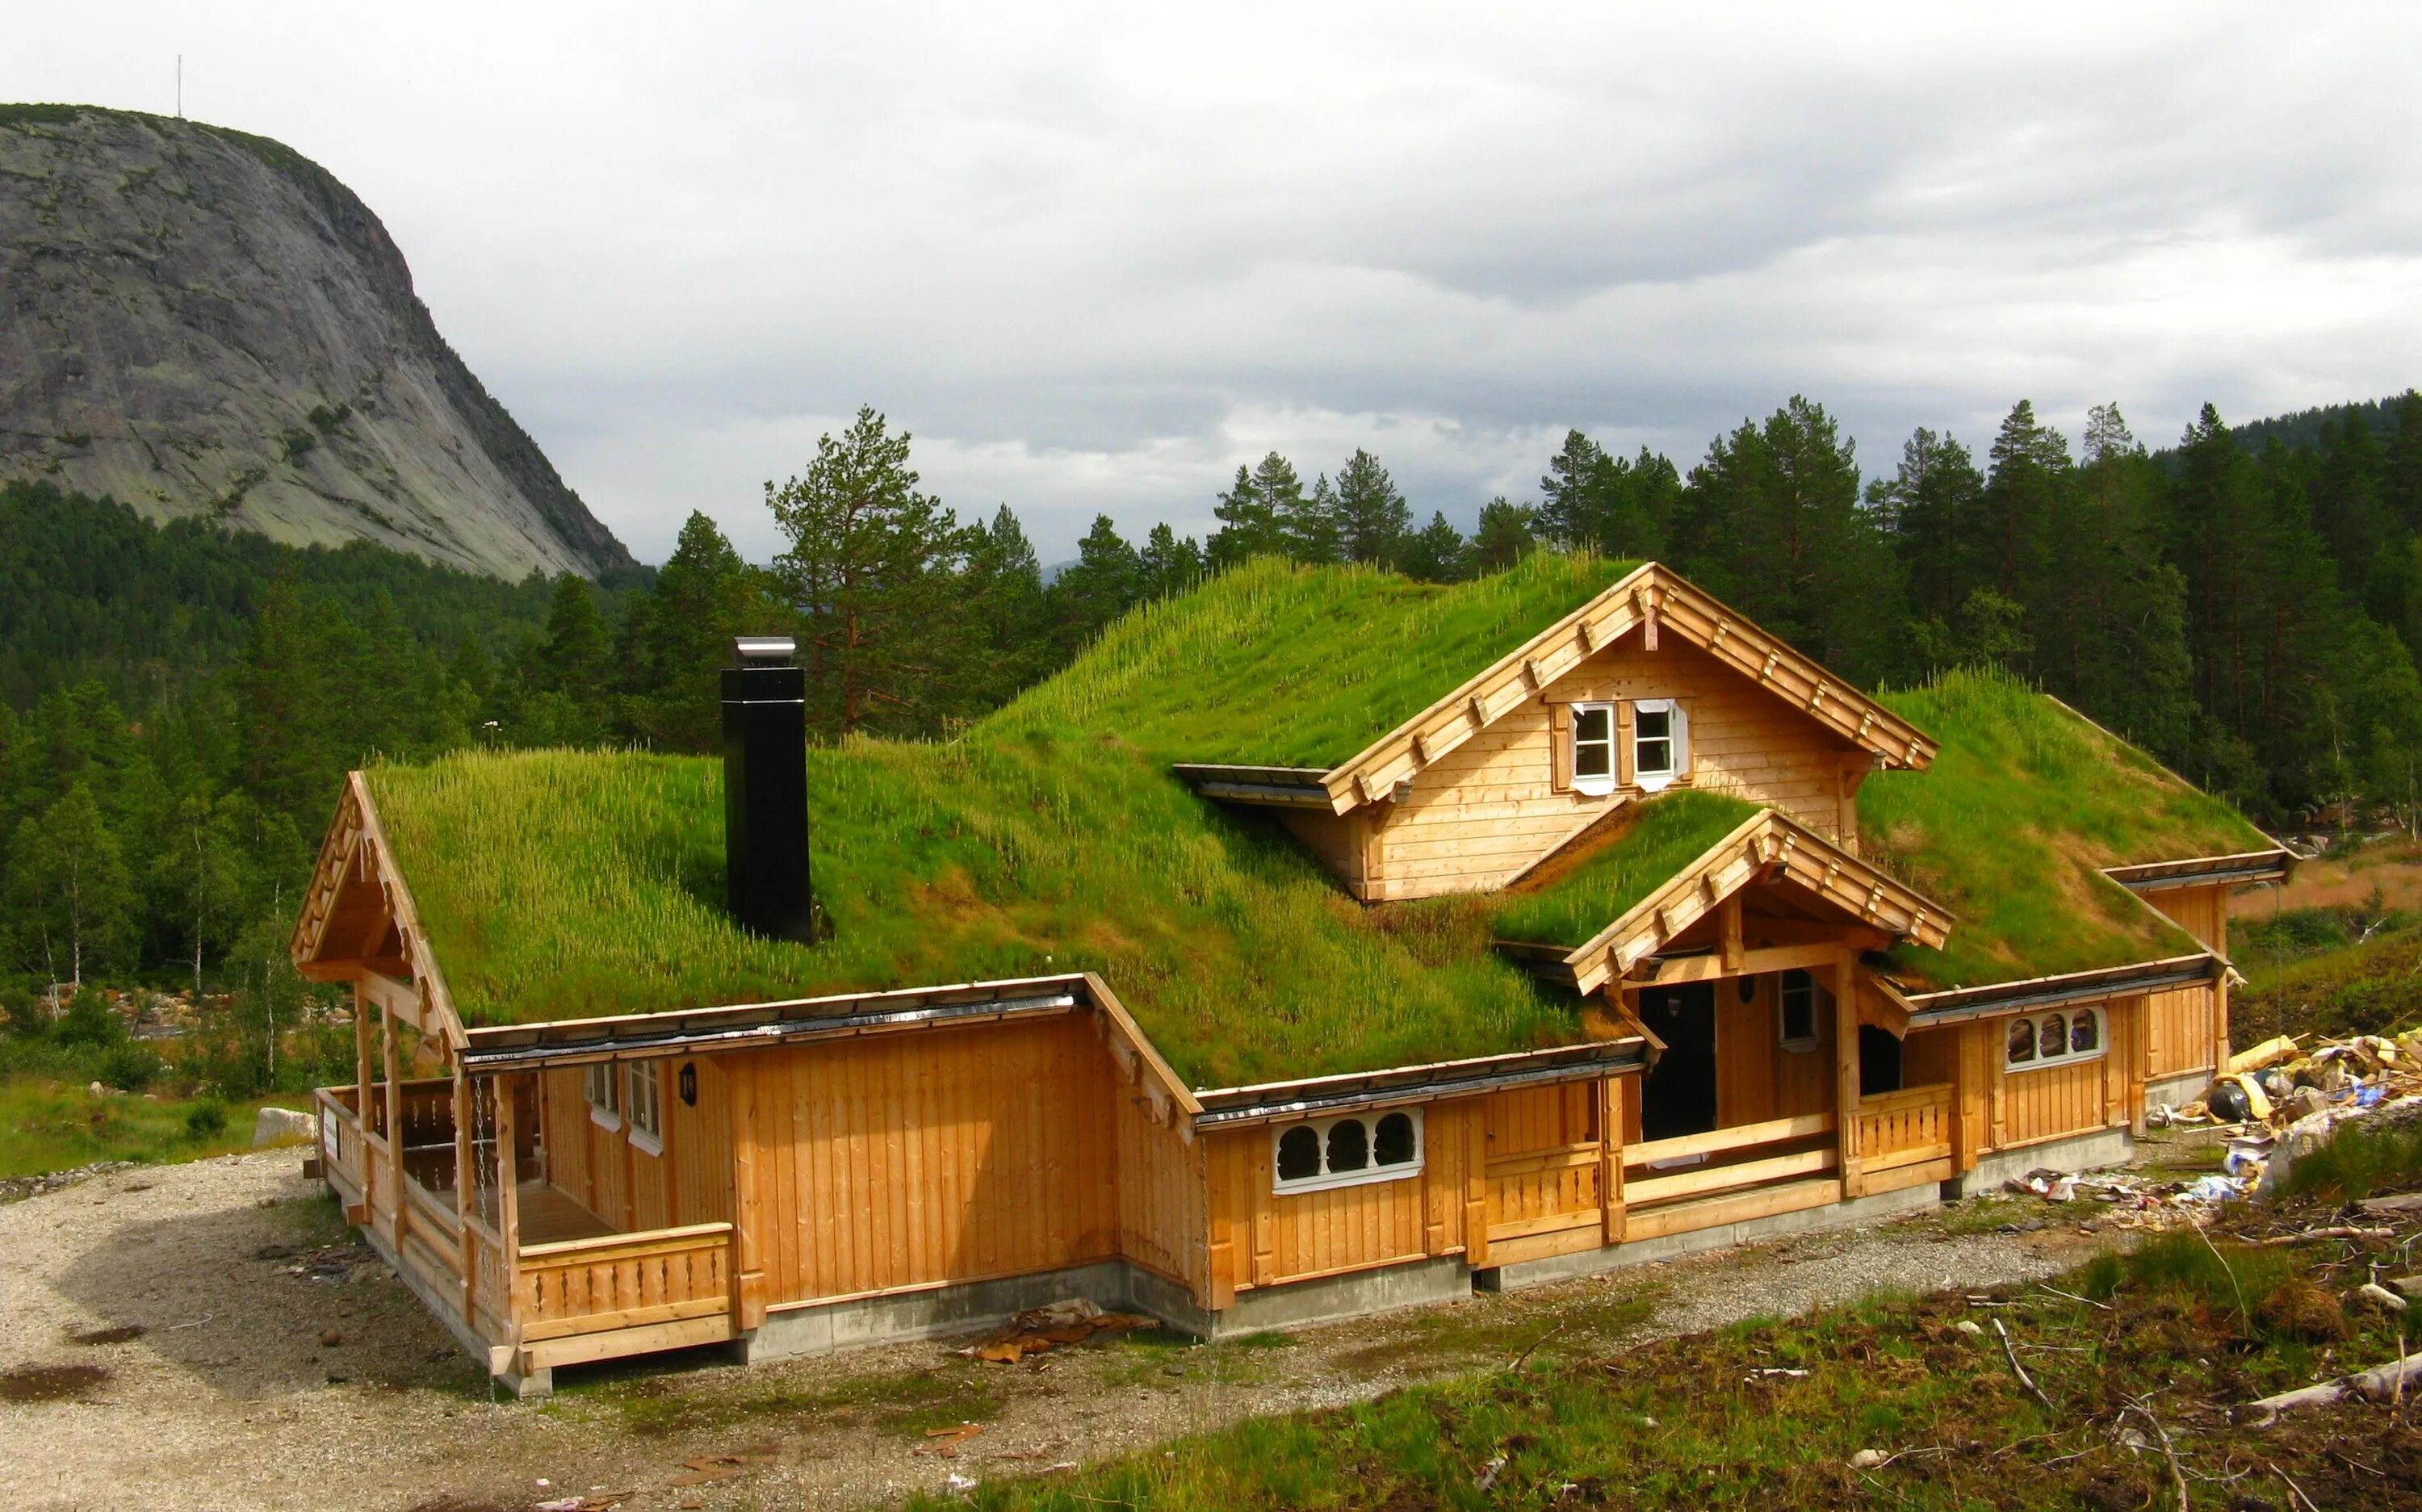 Земляная крыша. Зеленая кровля Норвегия. Зеленая кровля Скандинавия. Травяные крыши в Норвегии. Зеленые крыши в Норвегии.